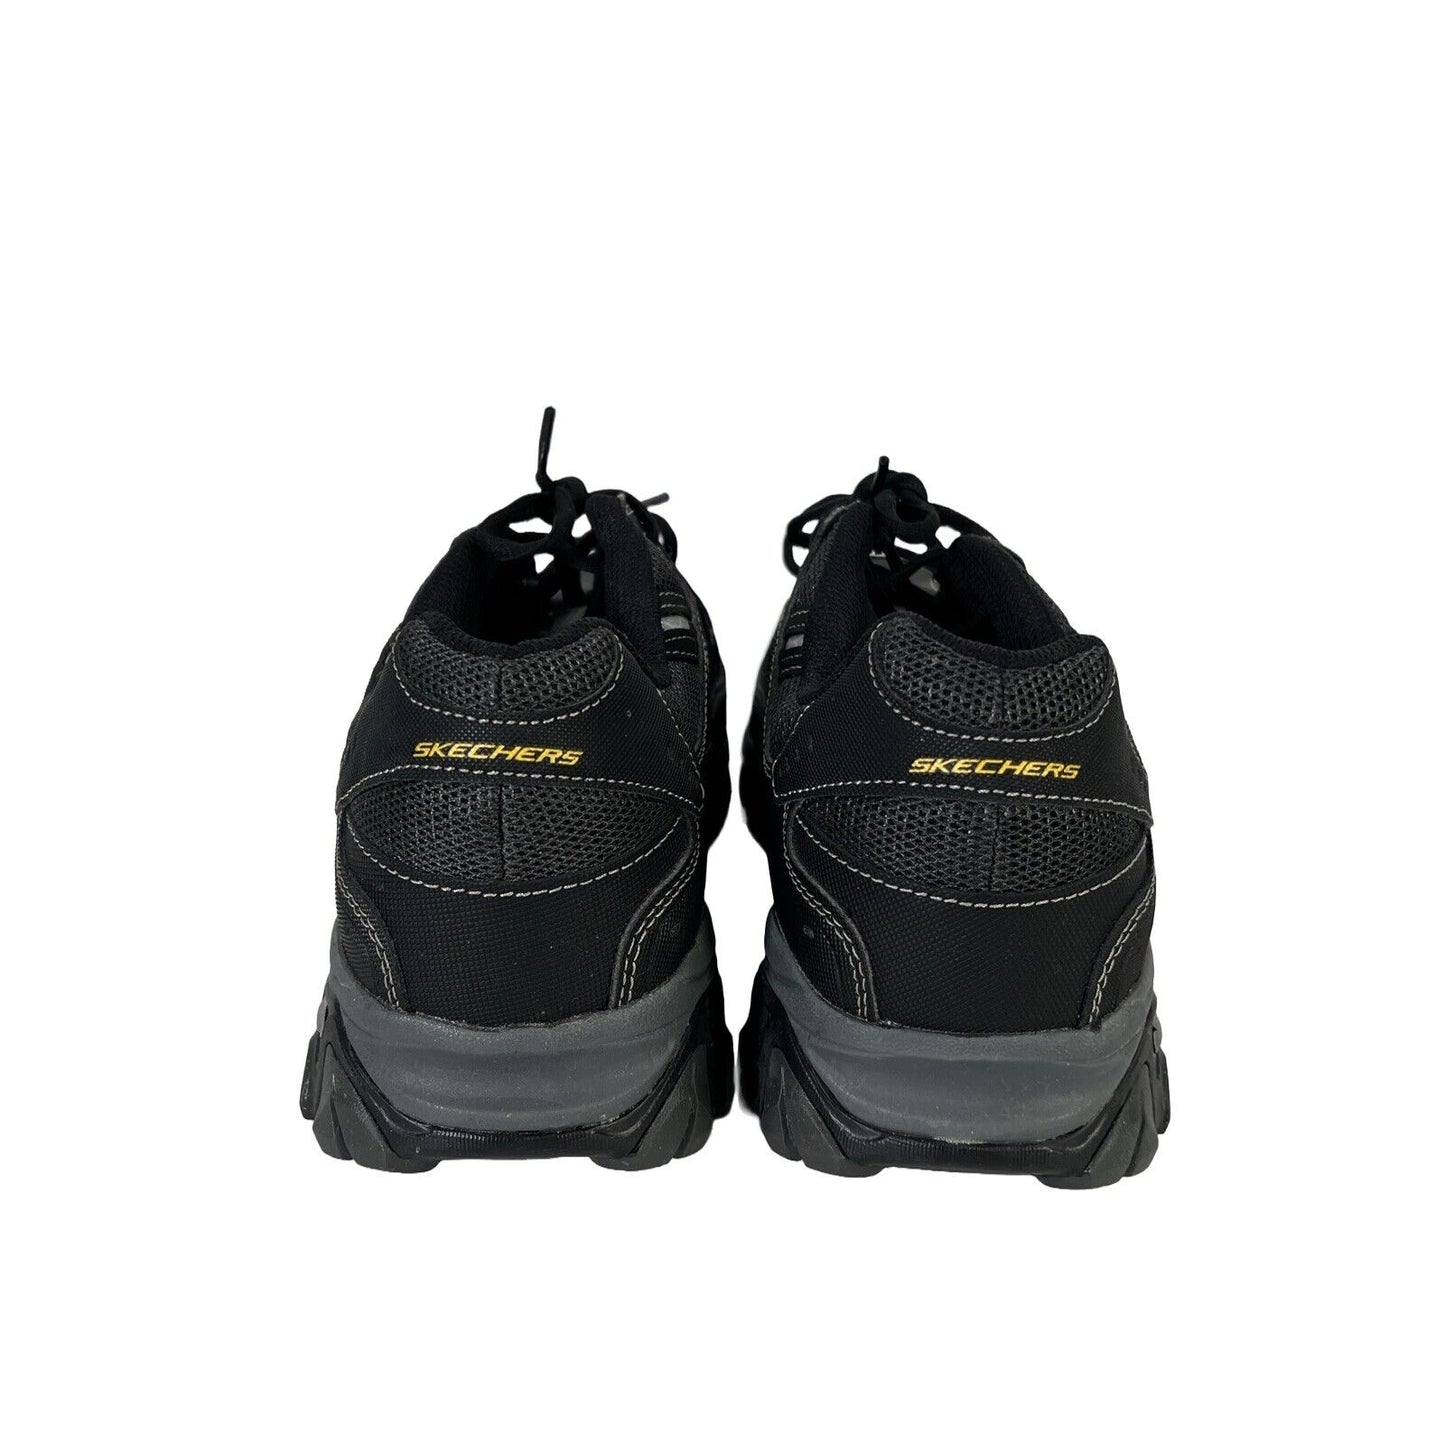 Skechers Men's Black After Burn Lace Up Walking Shoes - 14 Extra Wide